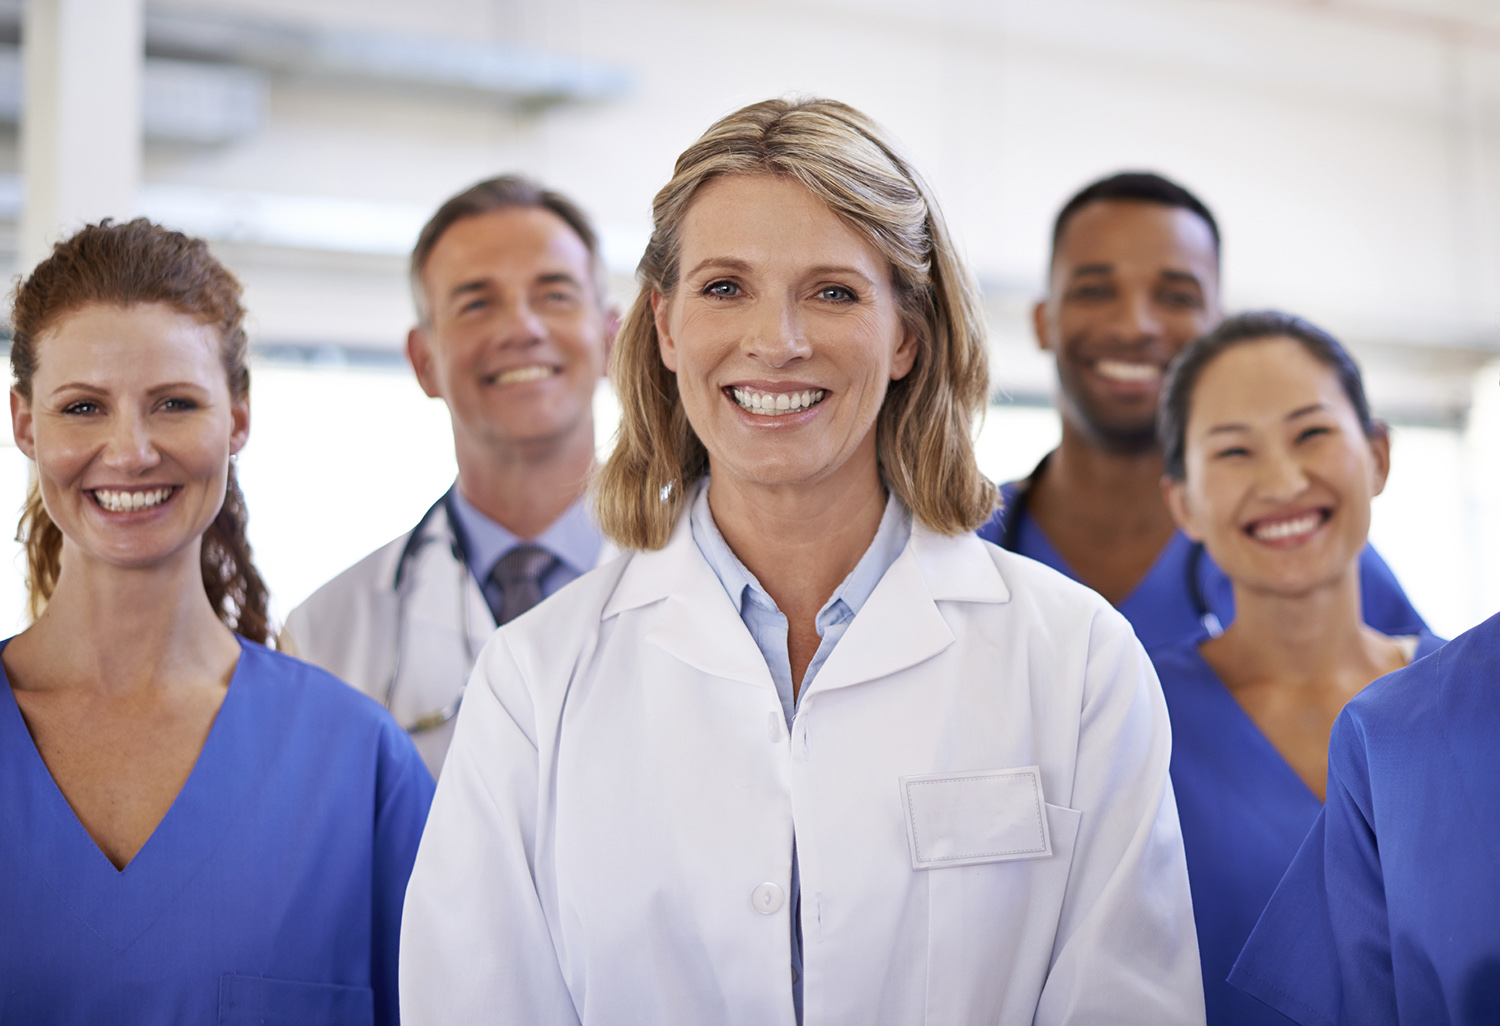 Portrait of a diverse team of medical professionals